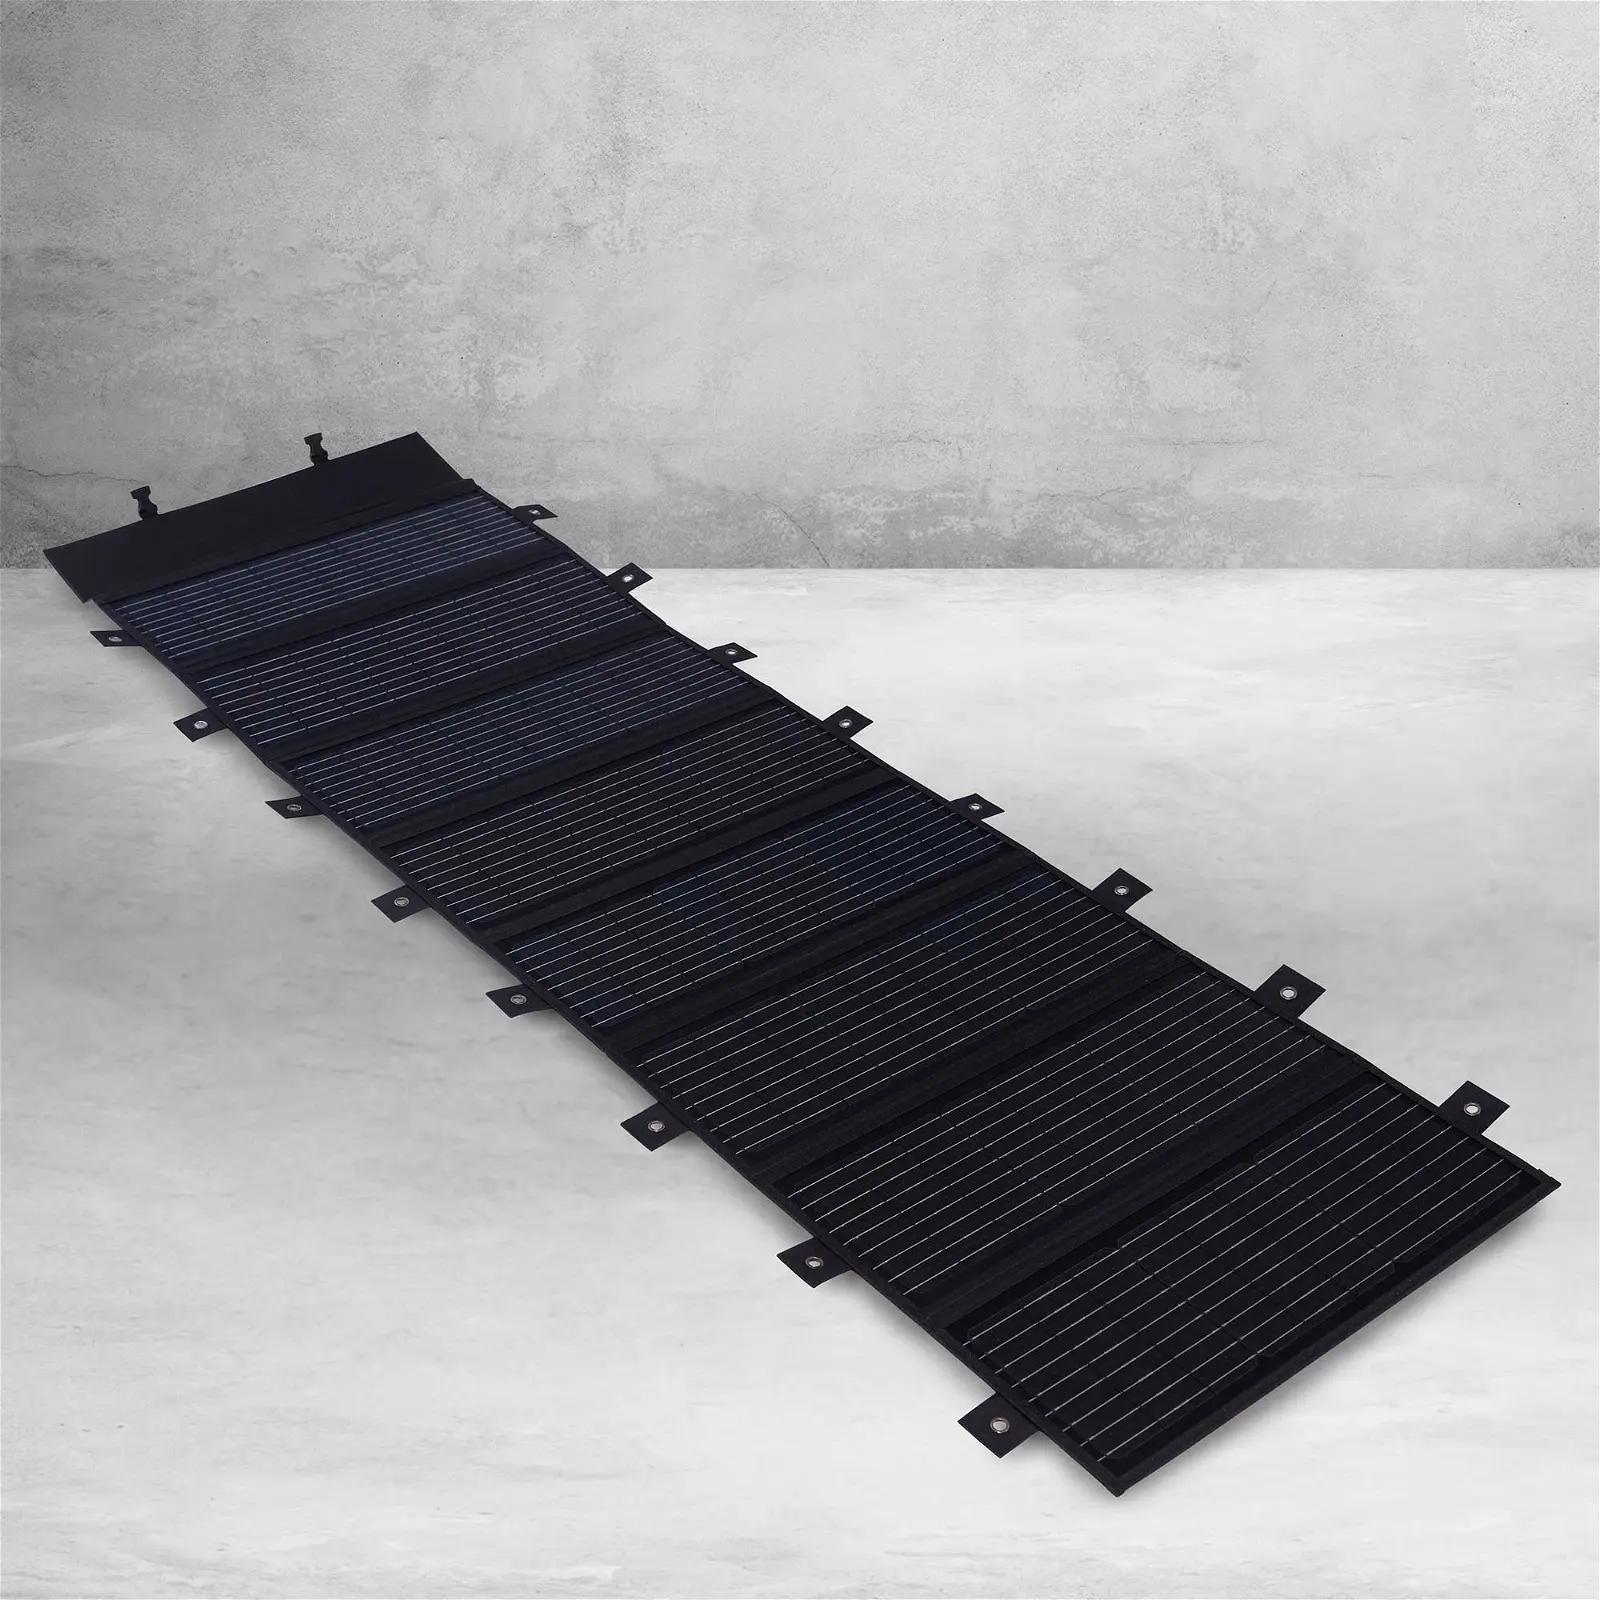 190 watt solar panels - What can a 180 watt solar panel run